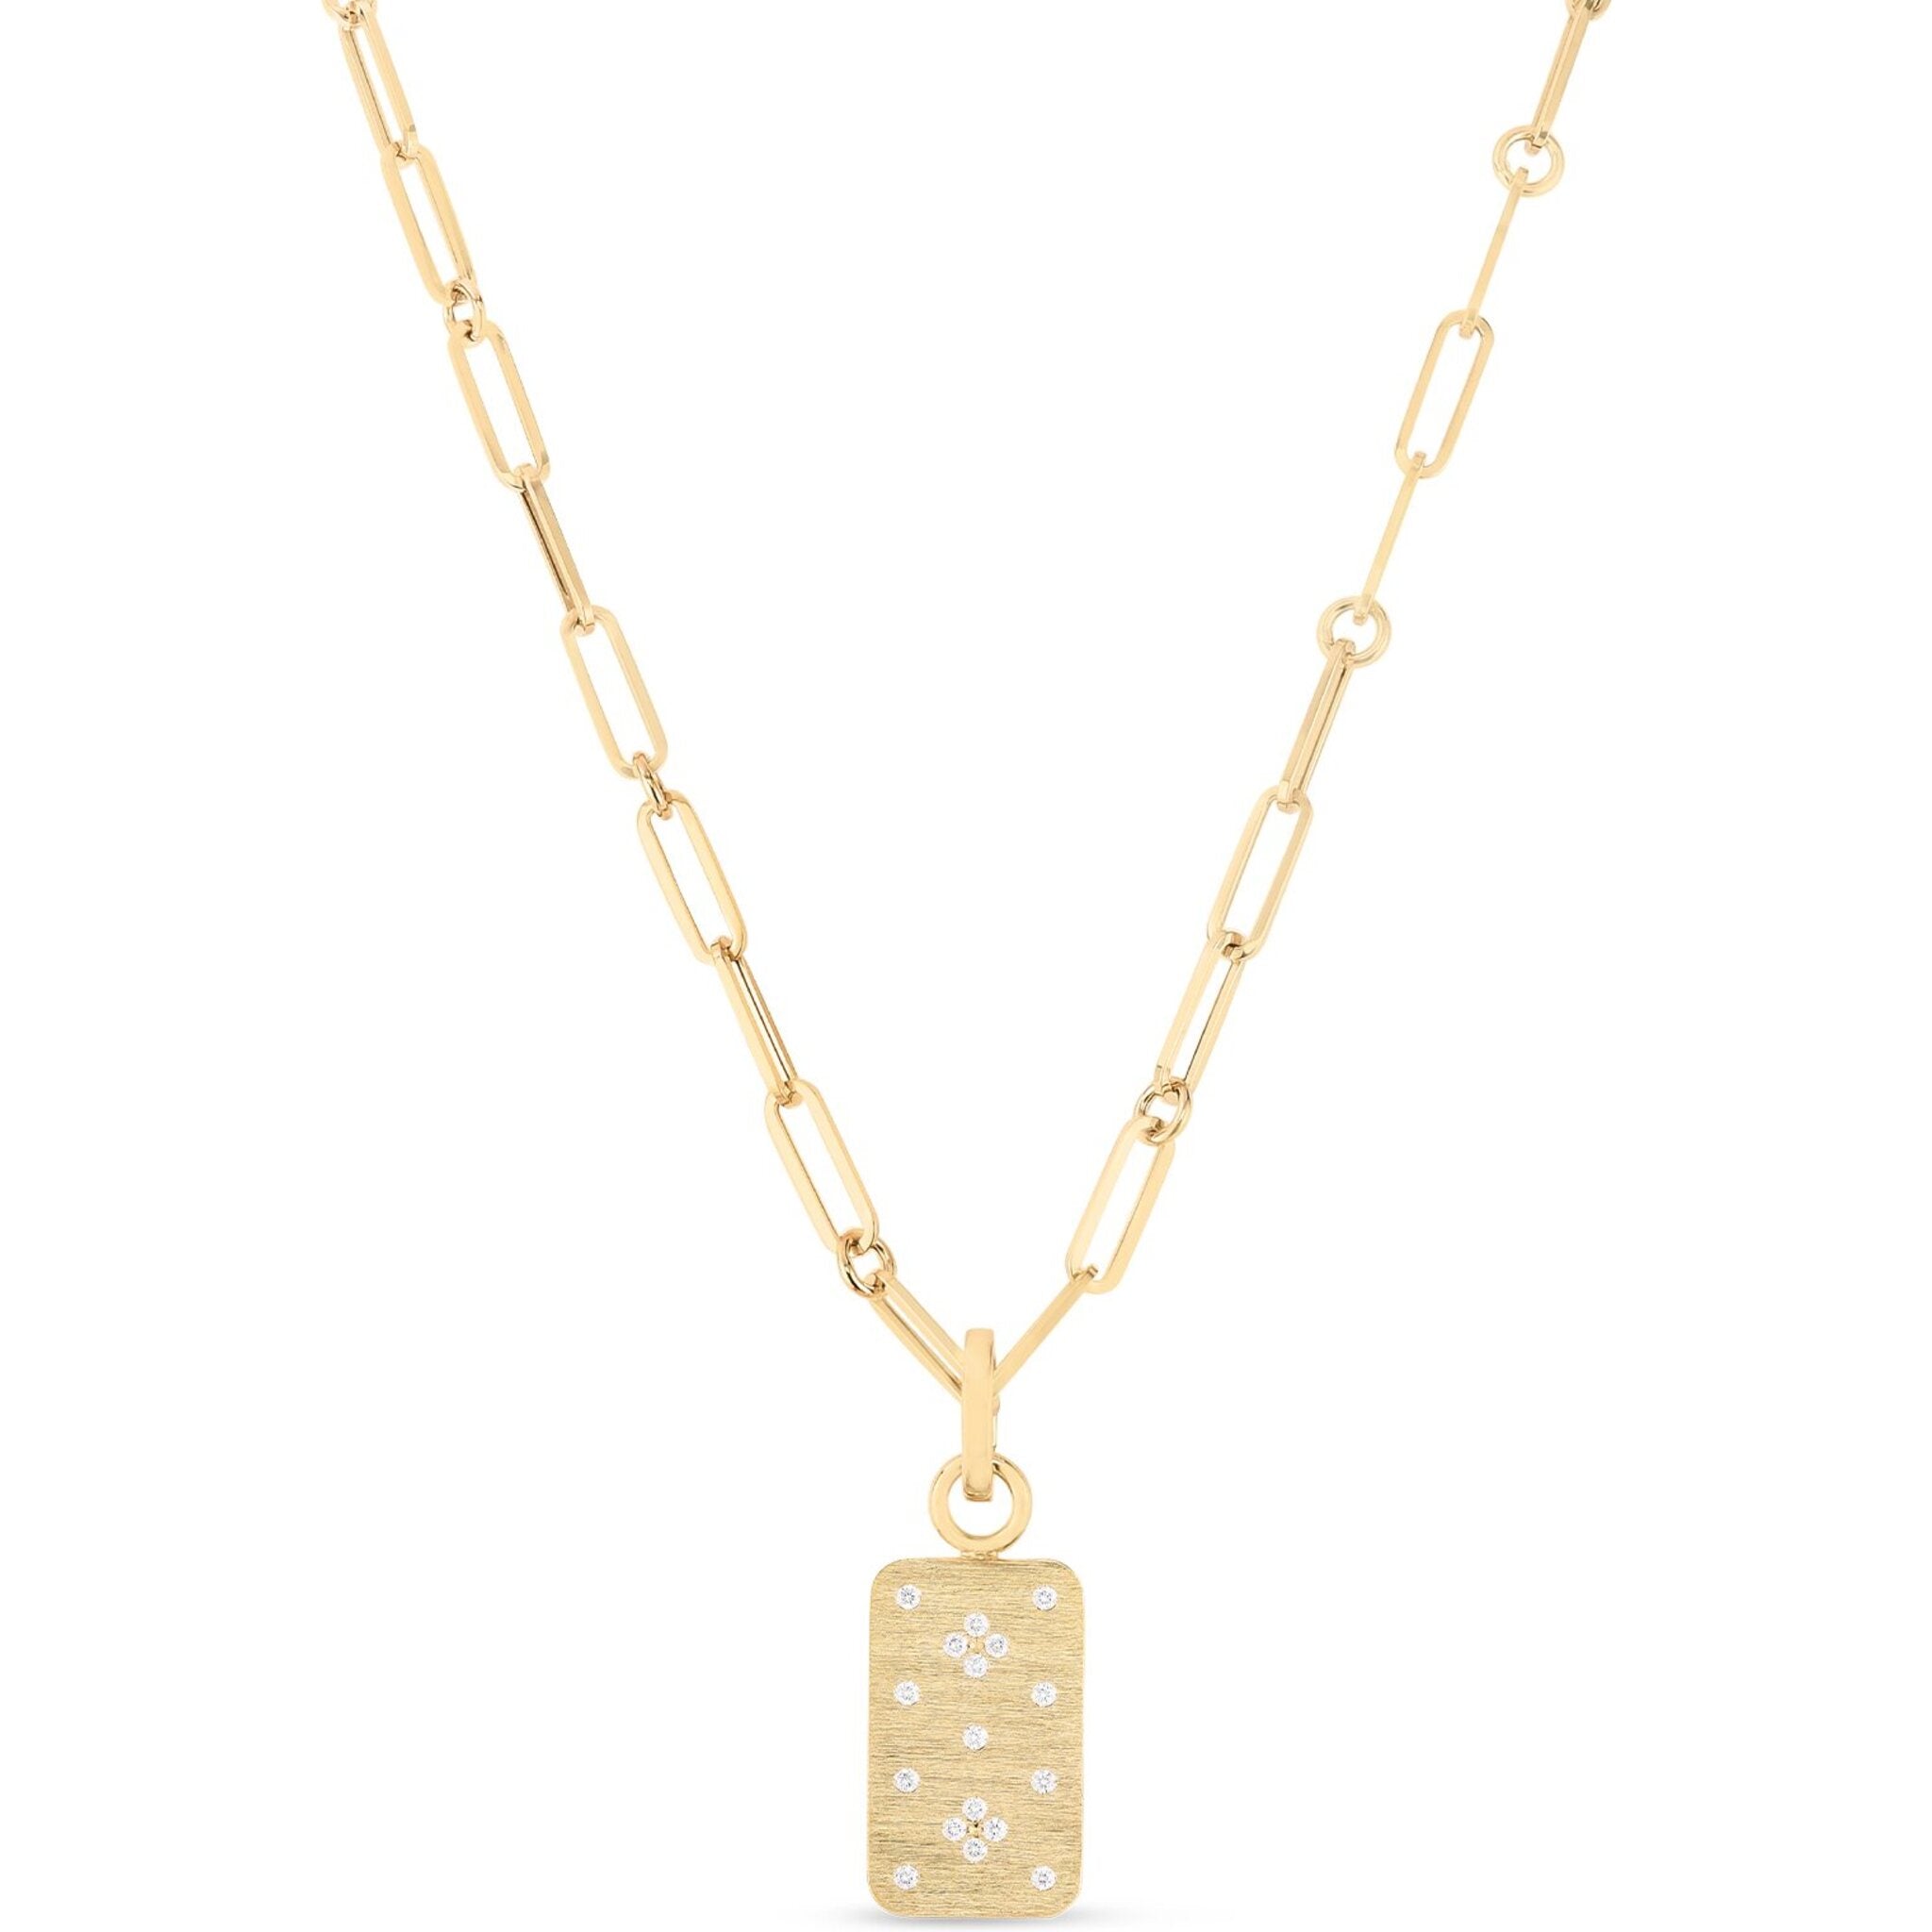 Roberto Coin - Venetian Princess Diamond Dog Tag Pendant Necklace in 18K Yellow Gold